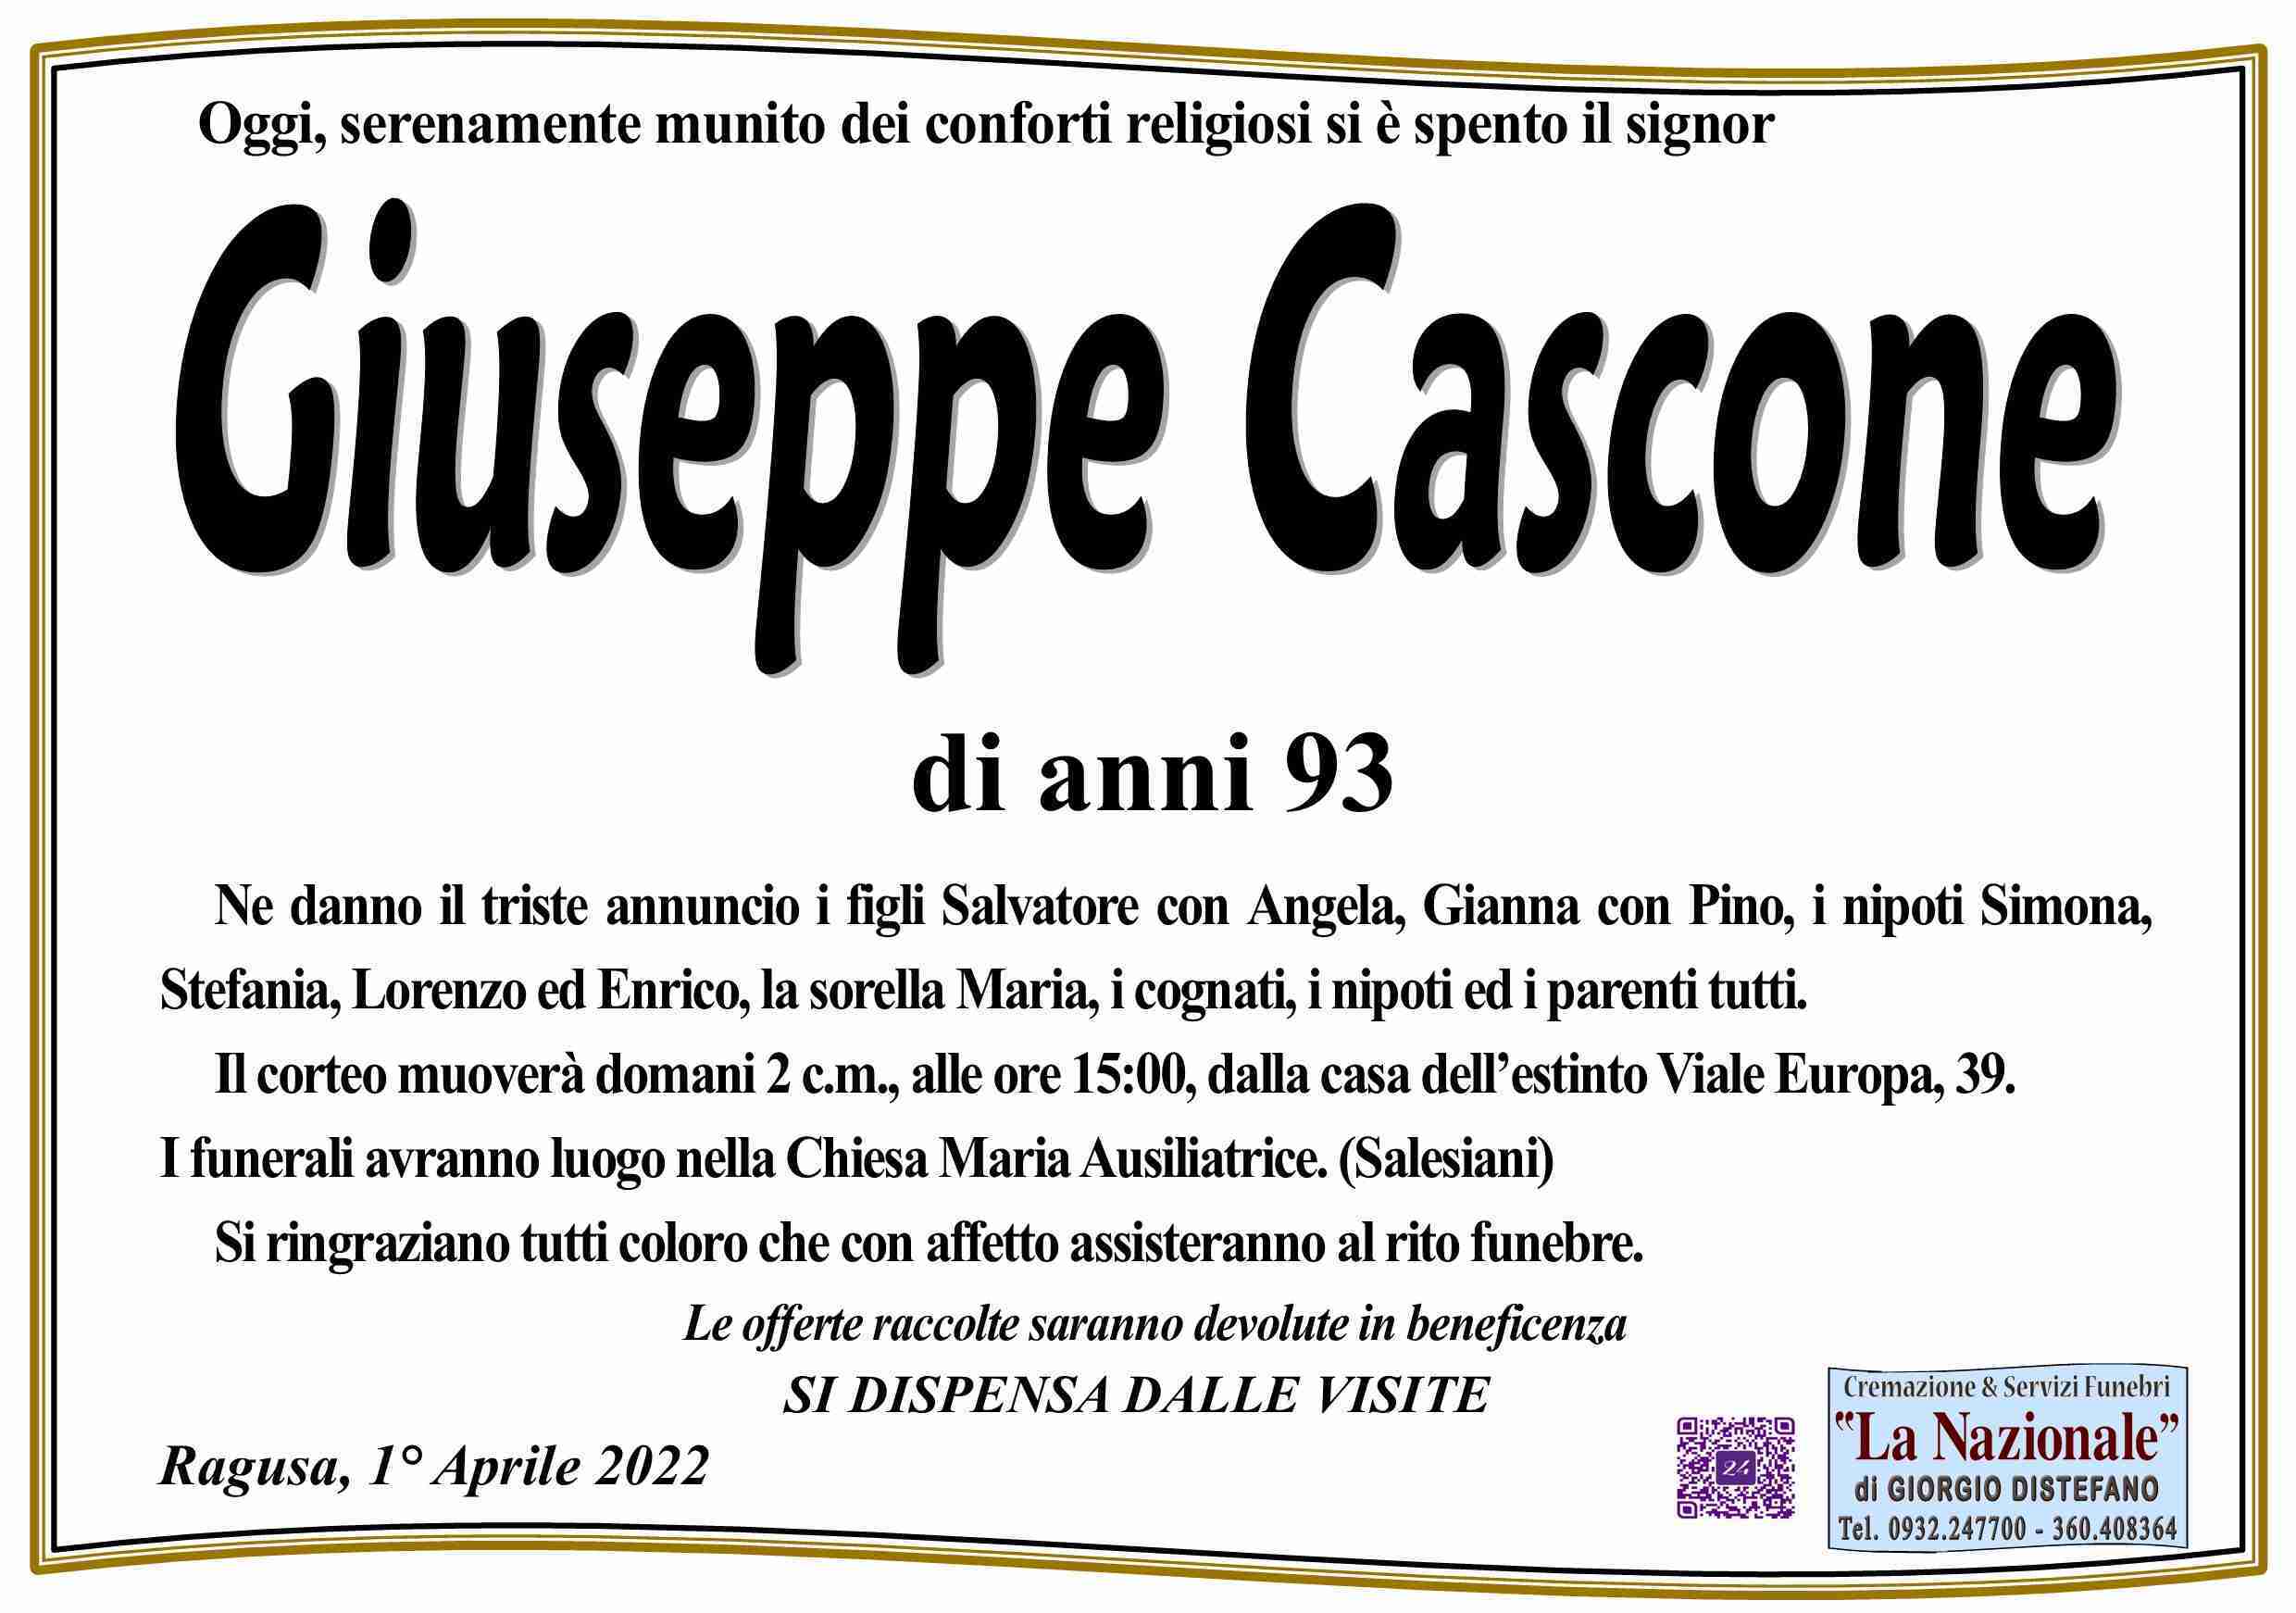 Giuseppe Cascone